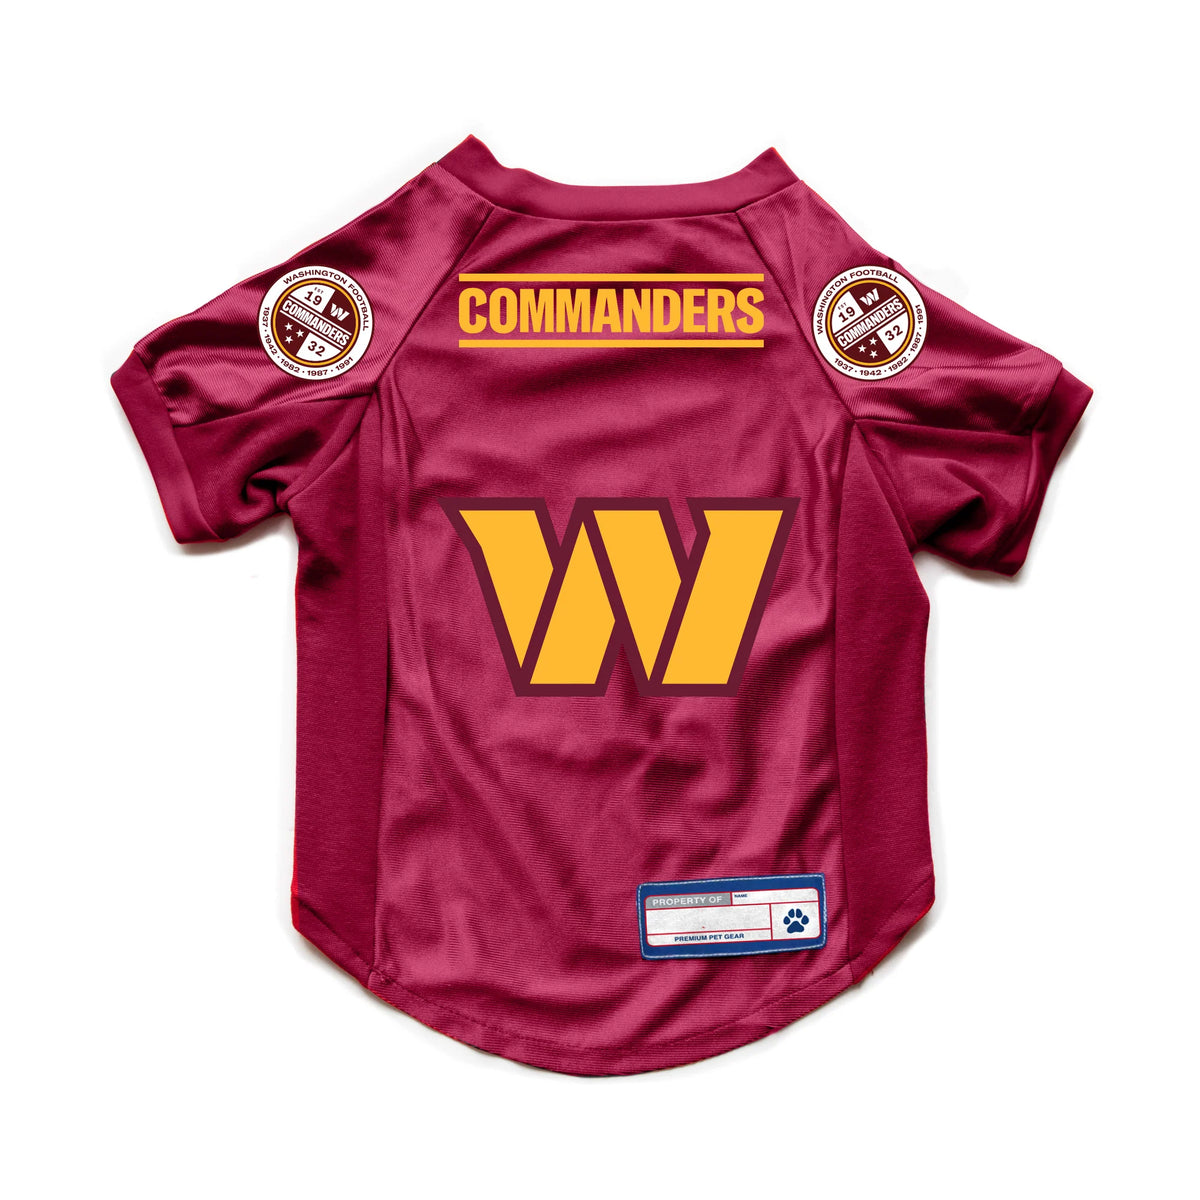 buy washington commanders gear